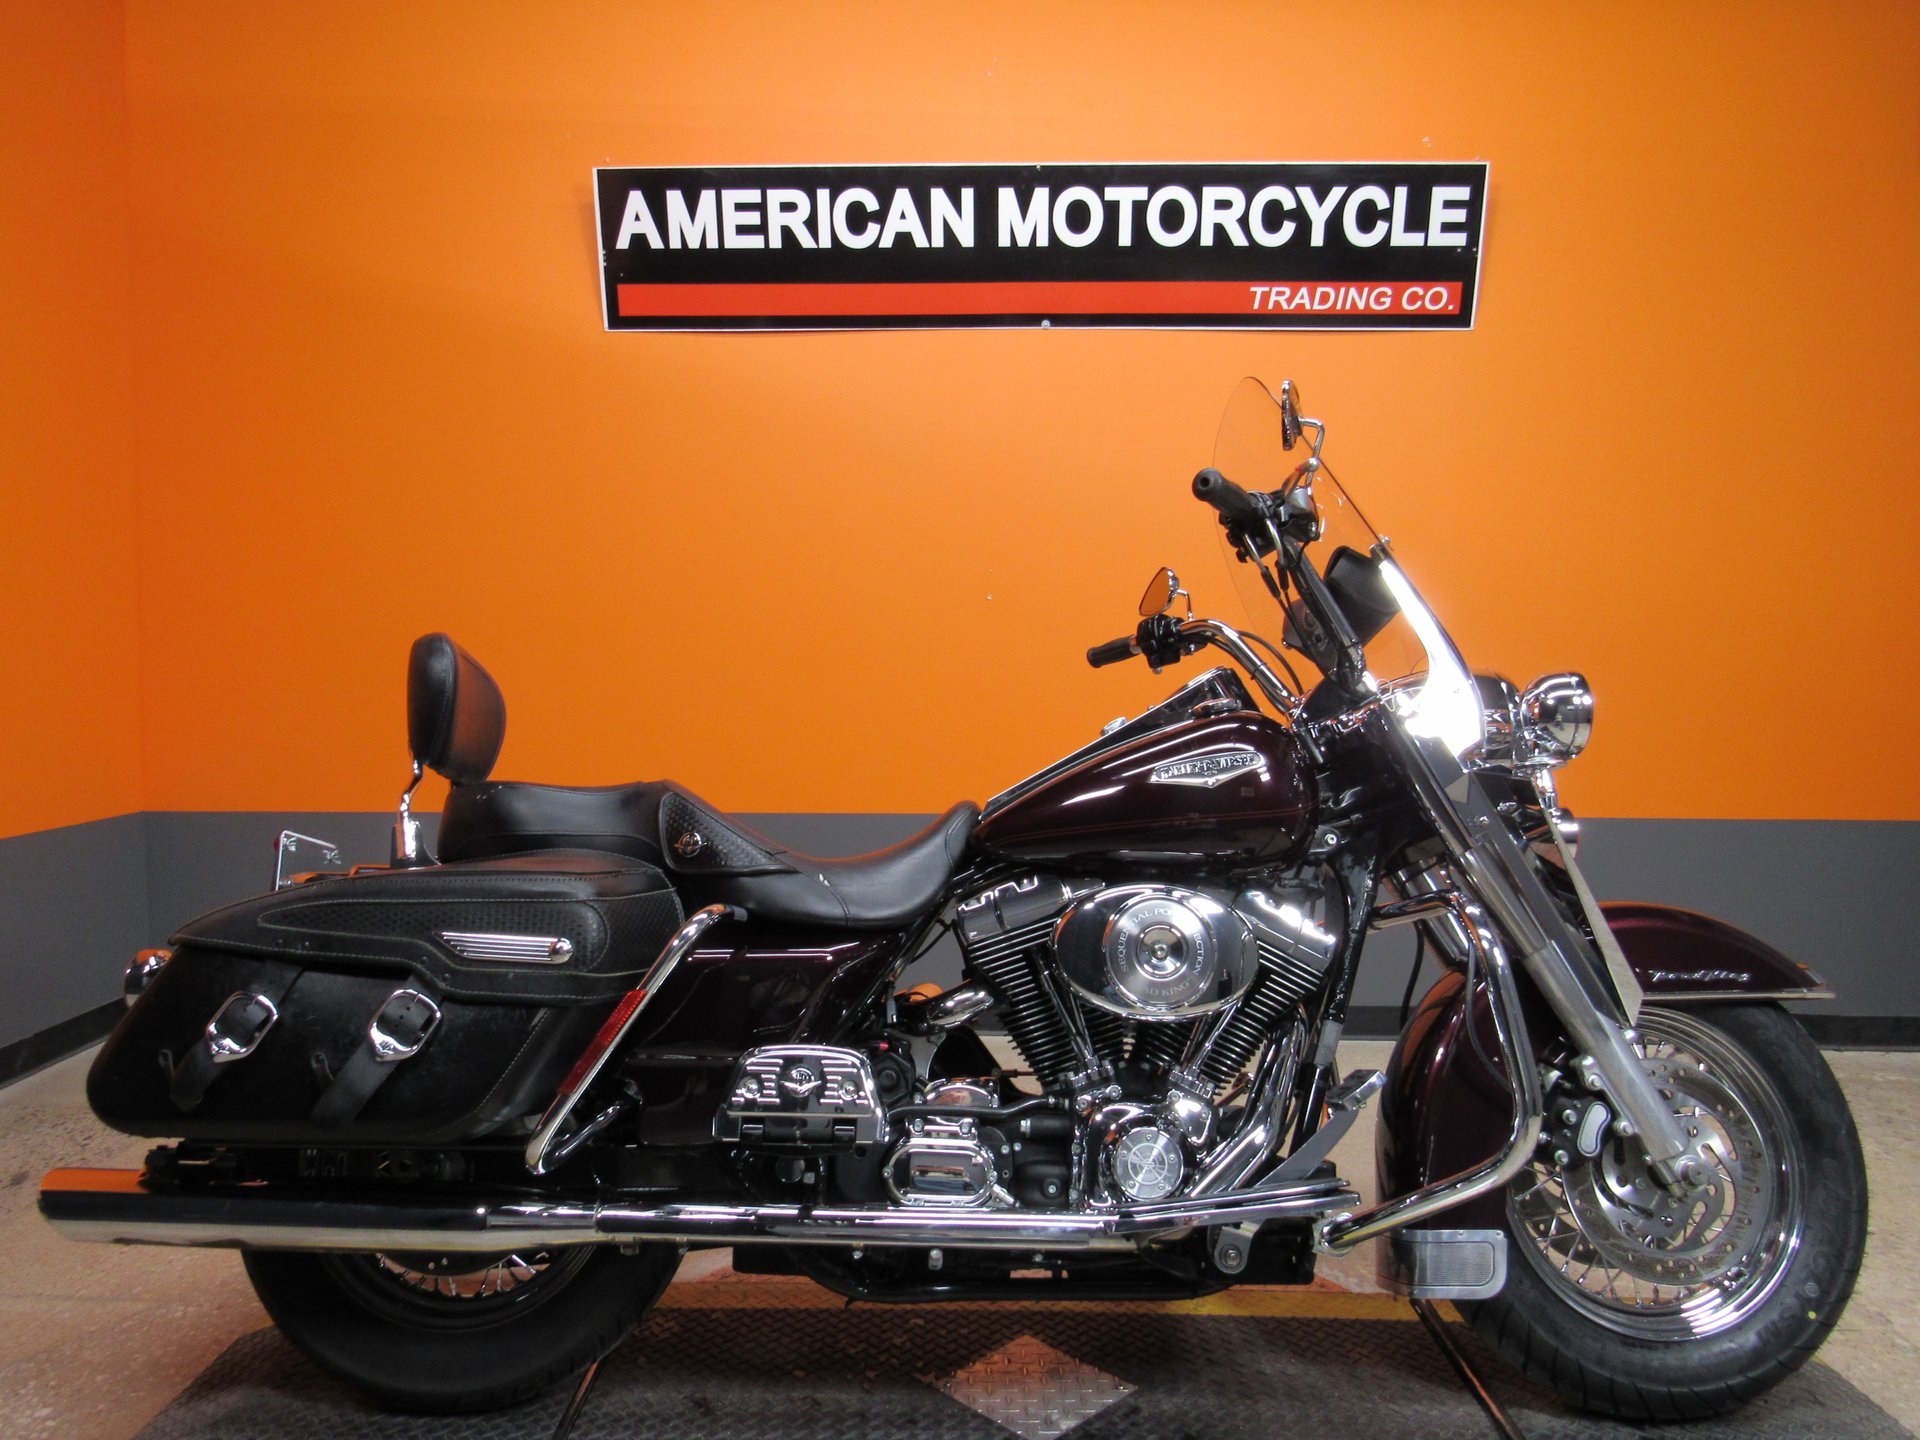 2005 Harley Davidson Road King American Motorcycle Trading Company Used Harley Davidson Motorcycles